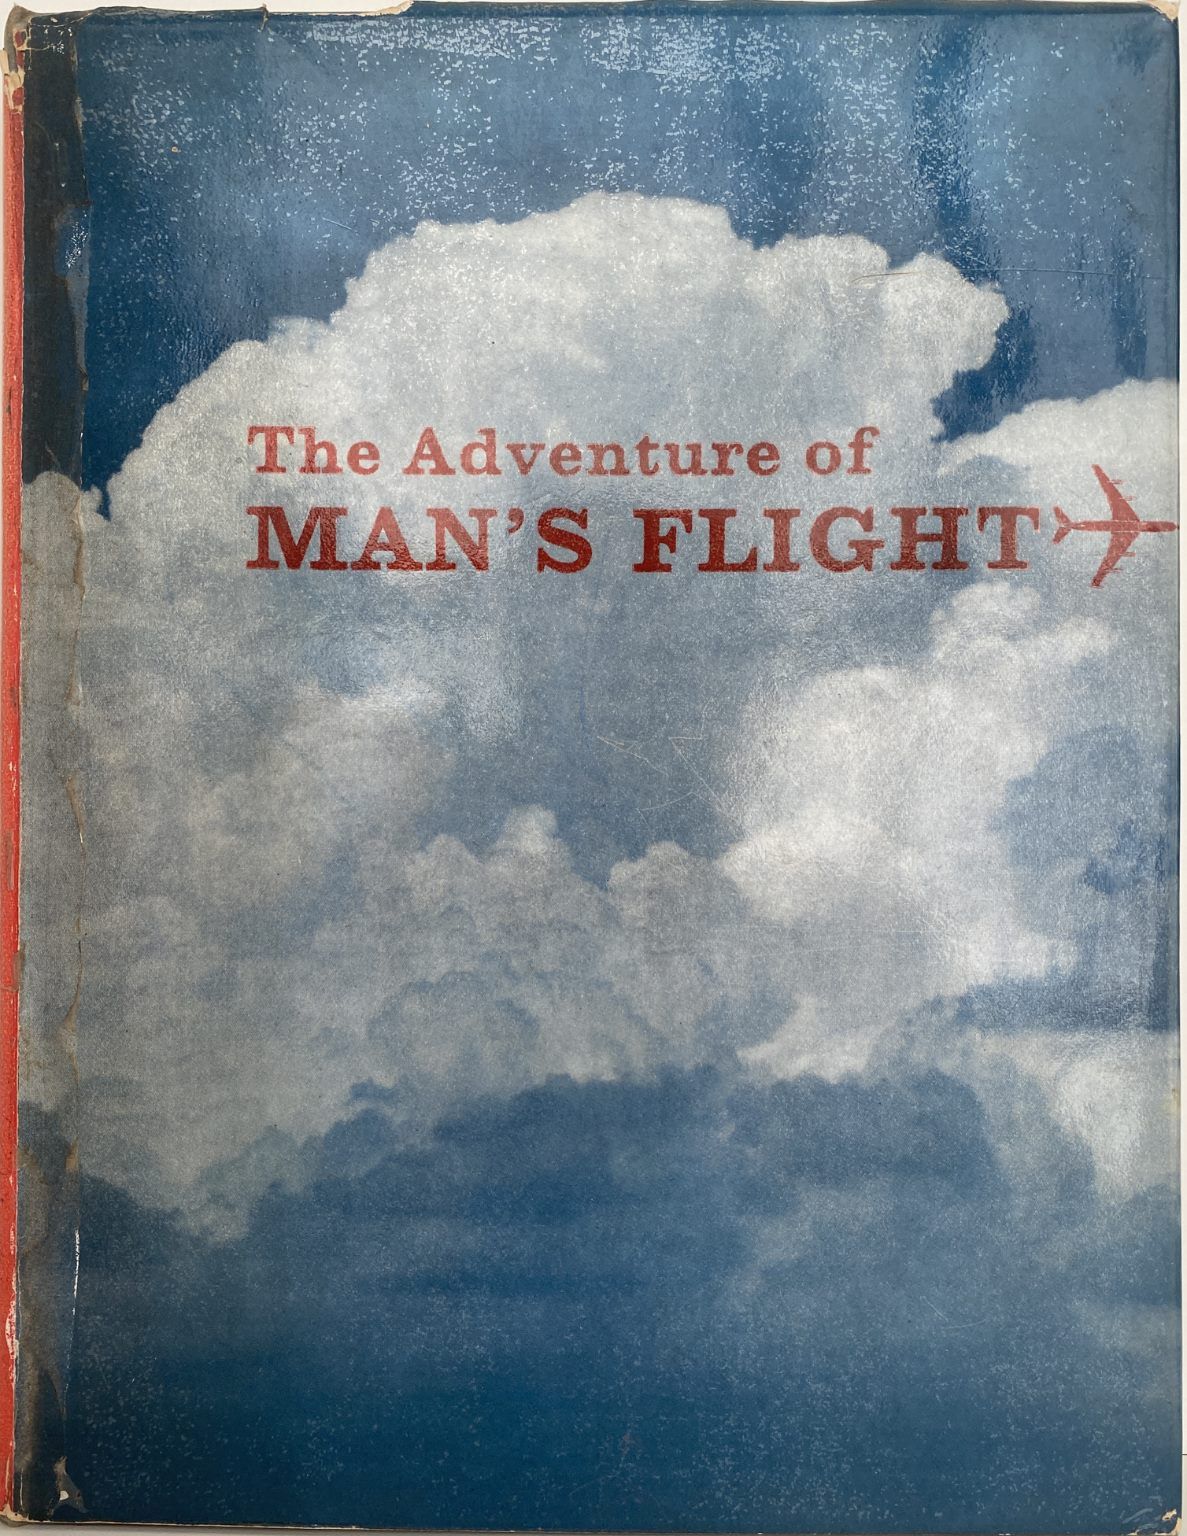 THE ADVENTURE OF MAN'S FLIGHT